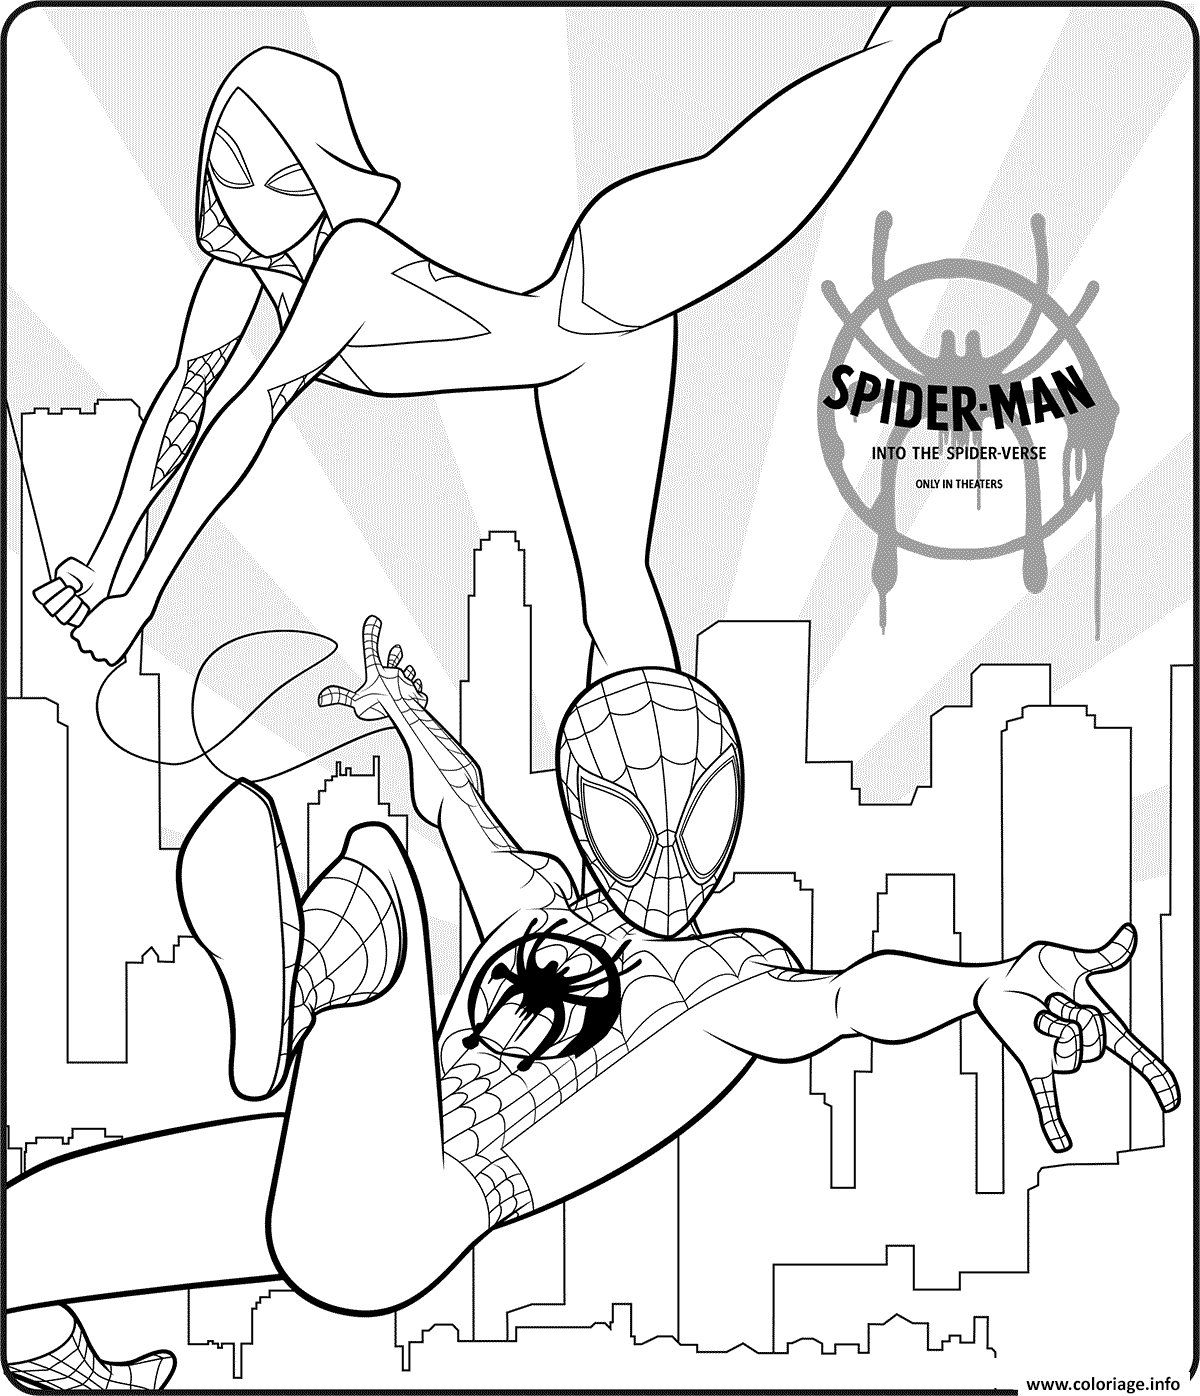 Coloriage Spider Man Into The Spider Verse Dessin Spiderman à imprimer